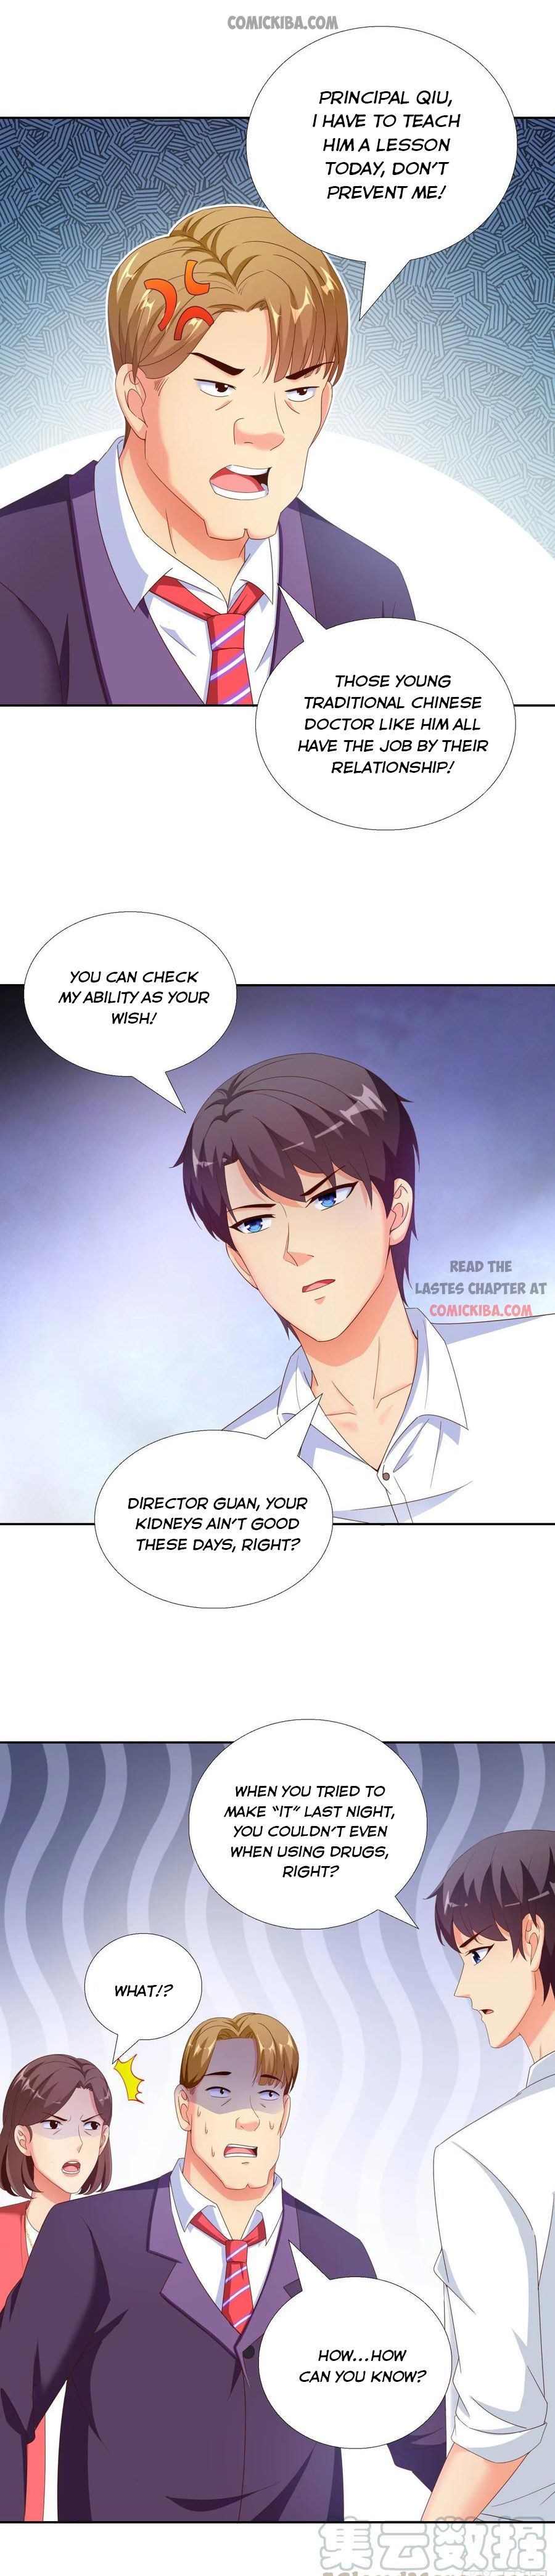 Super School Doctor - Page 3